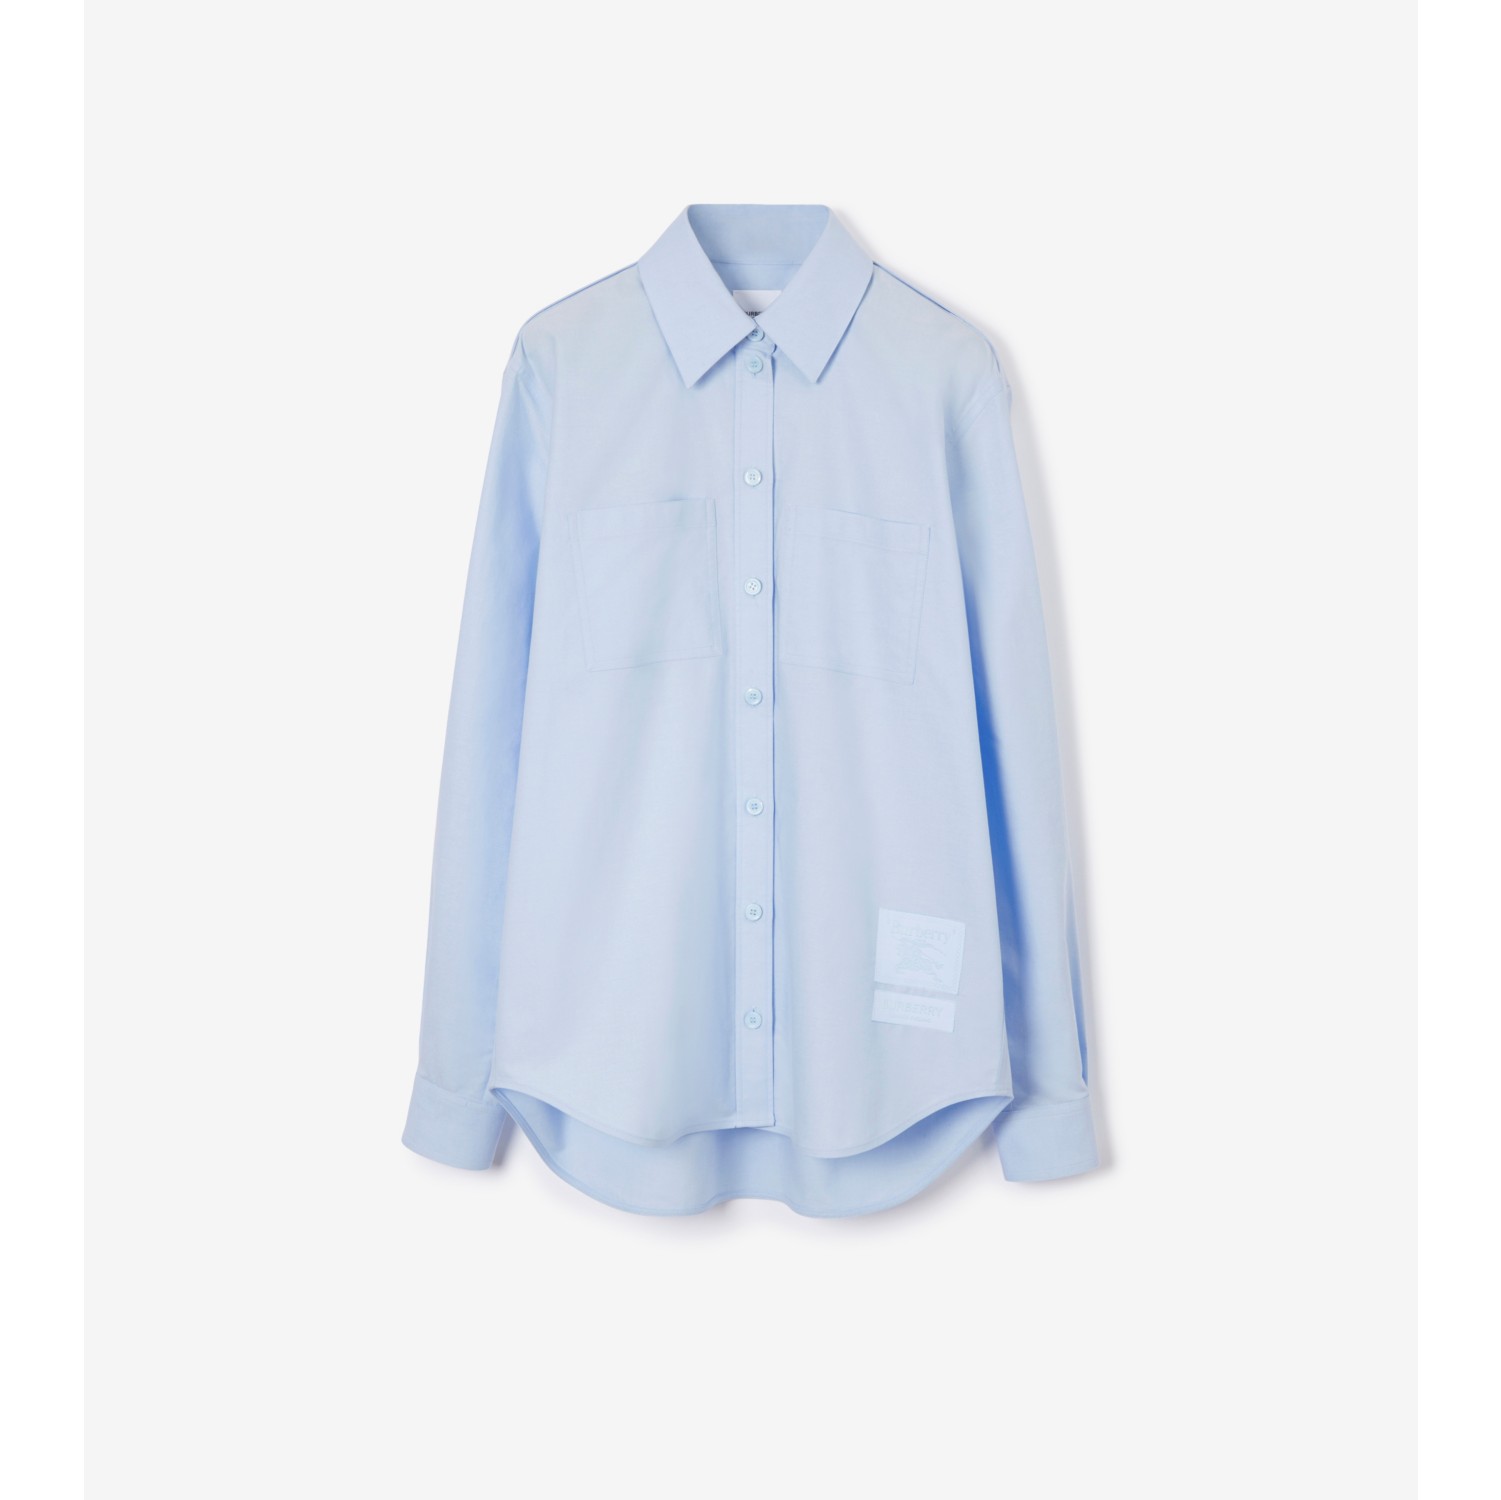 Cotton Oxford Shirt in Pale blue - Women